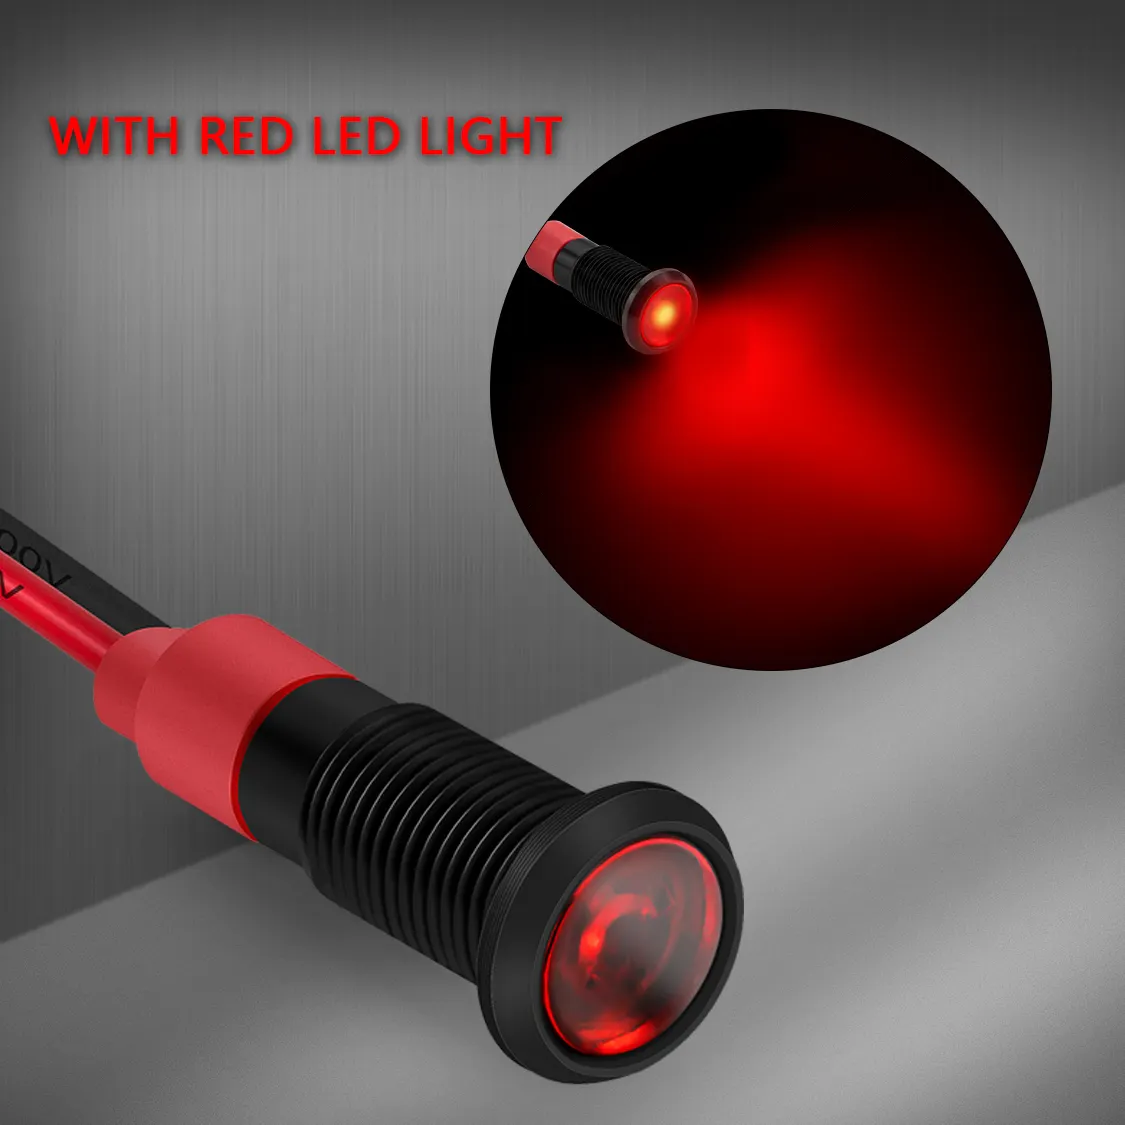 DaierTek 6mm 1/4" 12V LED Indicator Light 12 Volt Red Pilot Lamp IP67 Waterproof Aluminum Metal Material Black Bezel With Wire